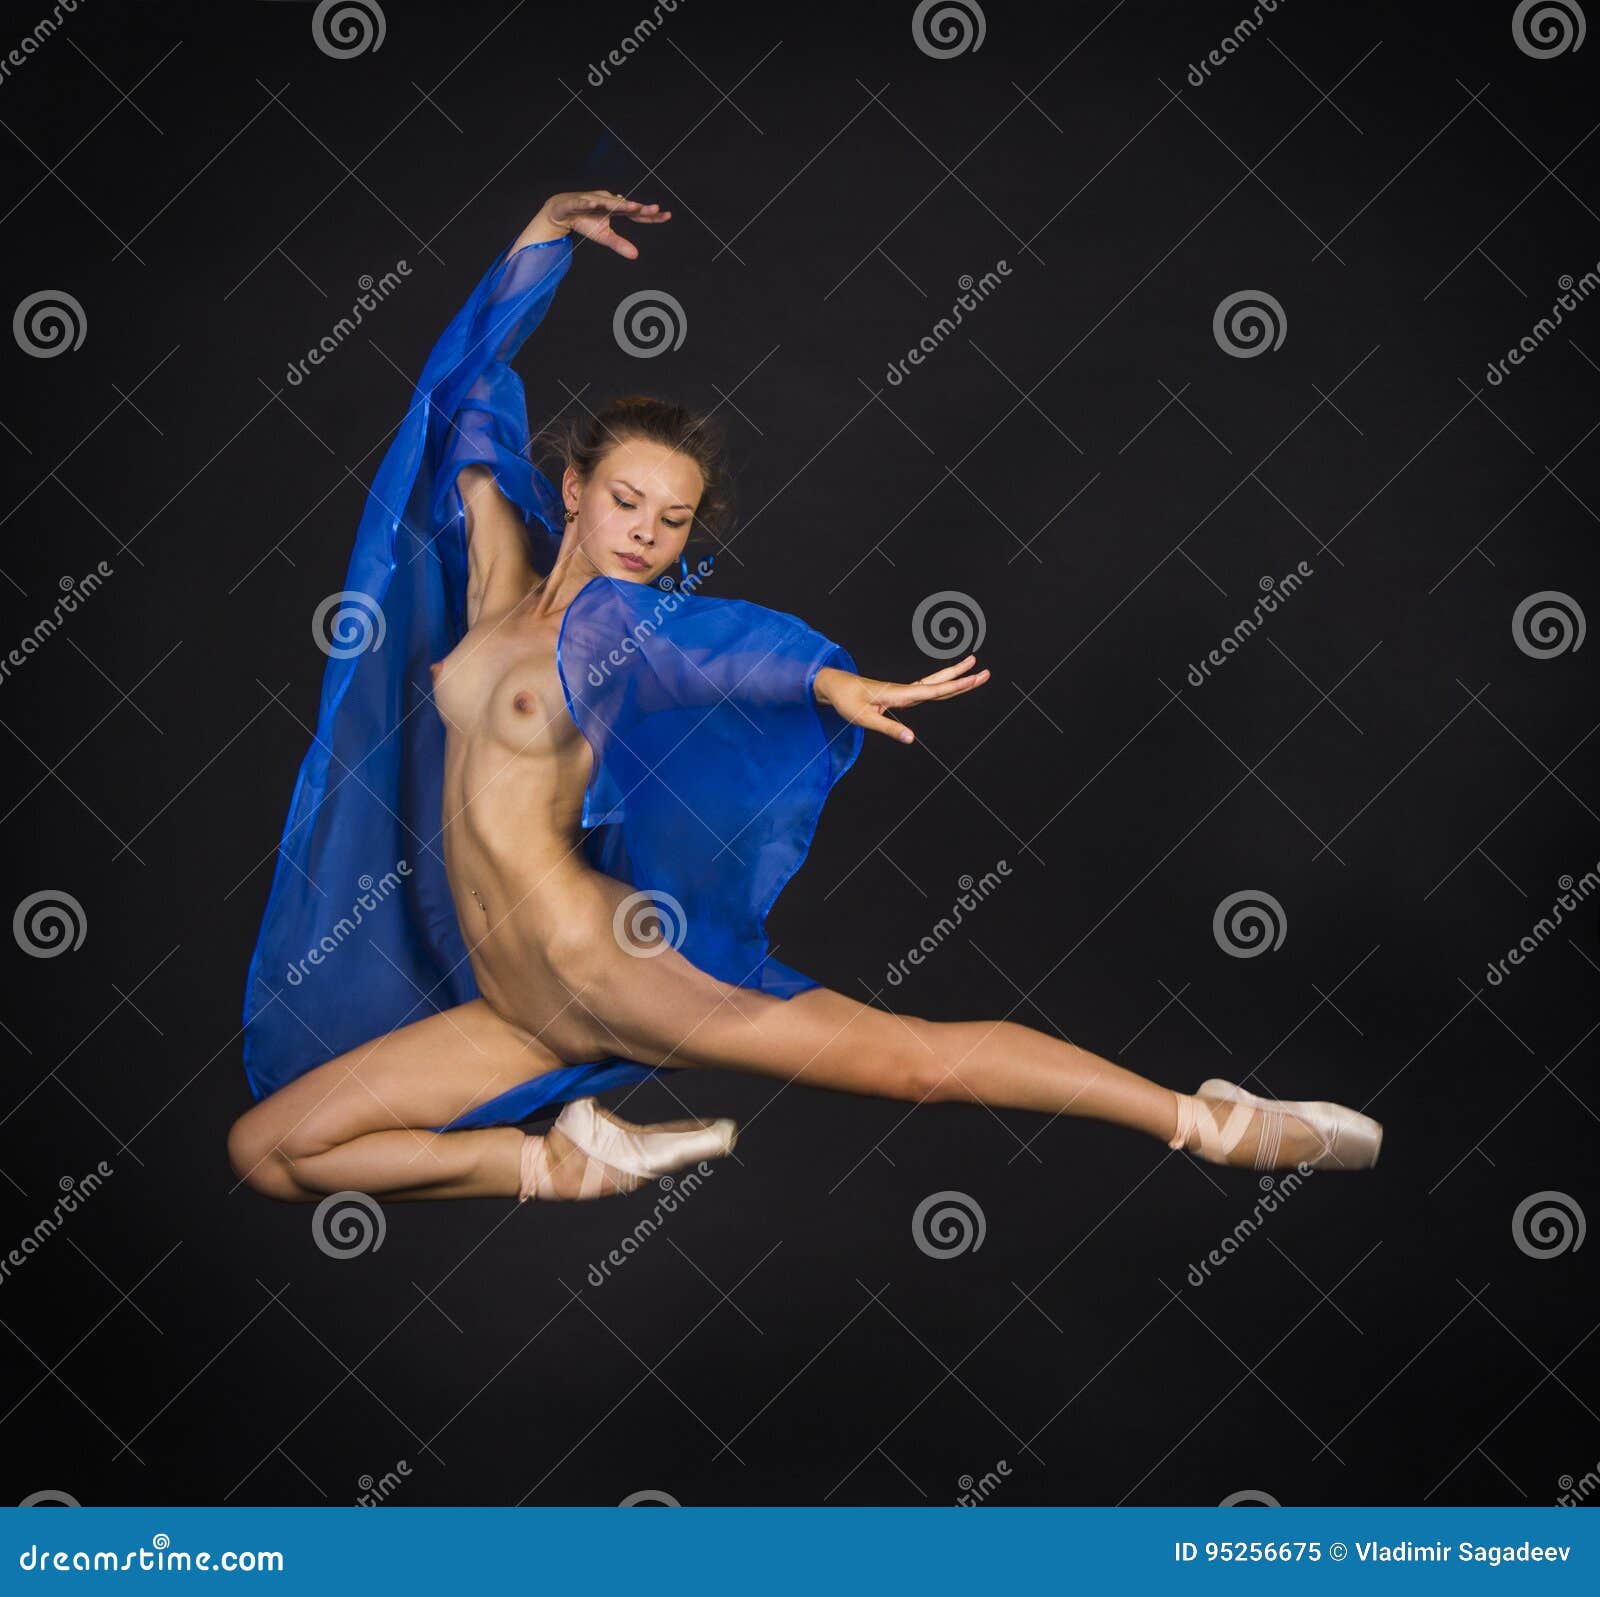 Nude girl dancing ballet. stock image. Image of dancing - 95256675